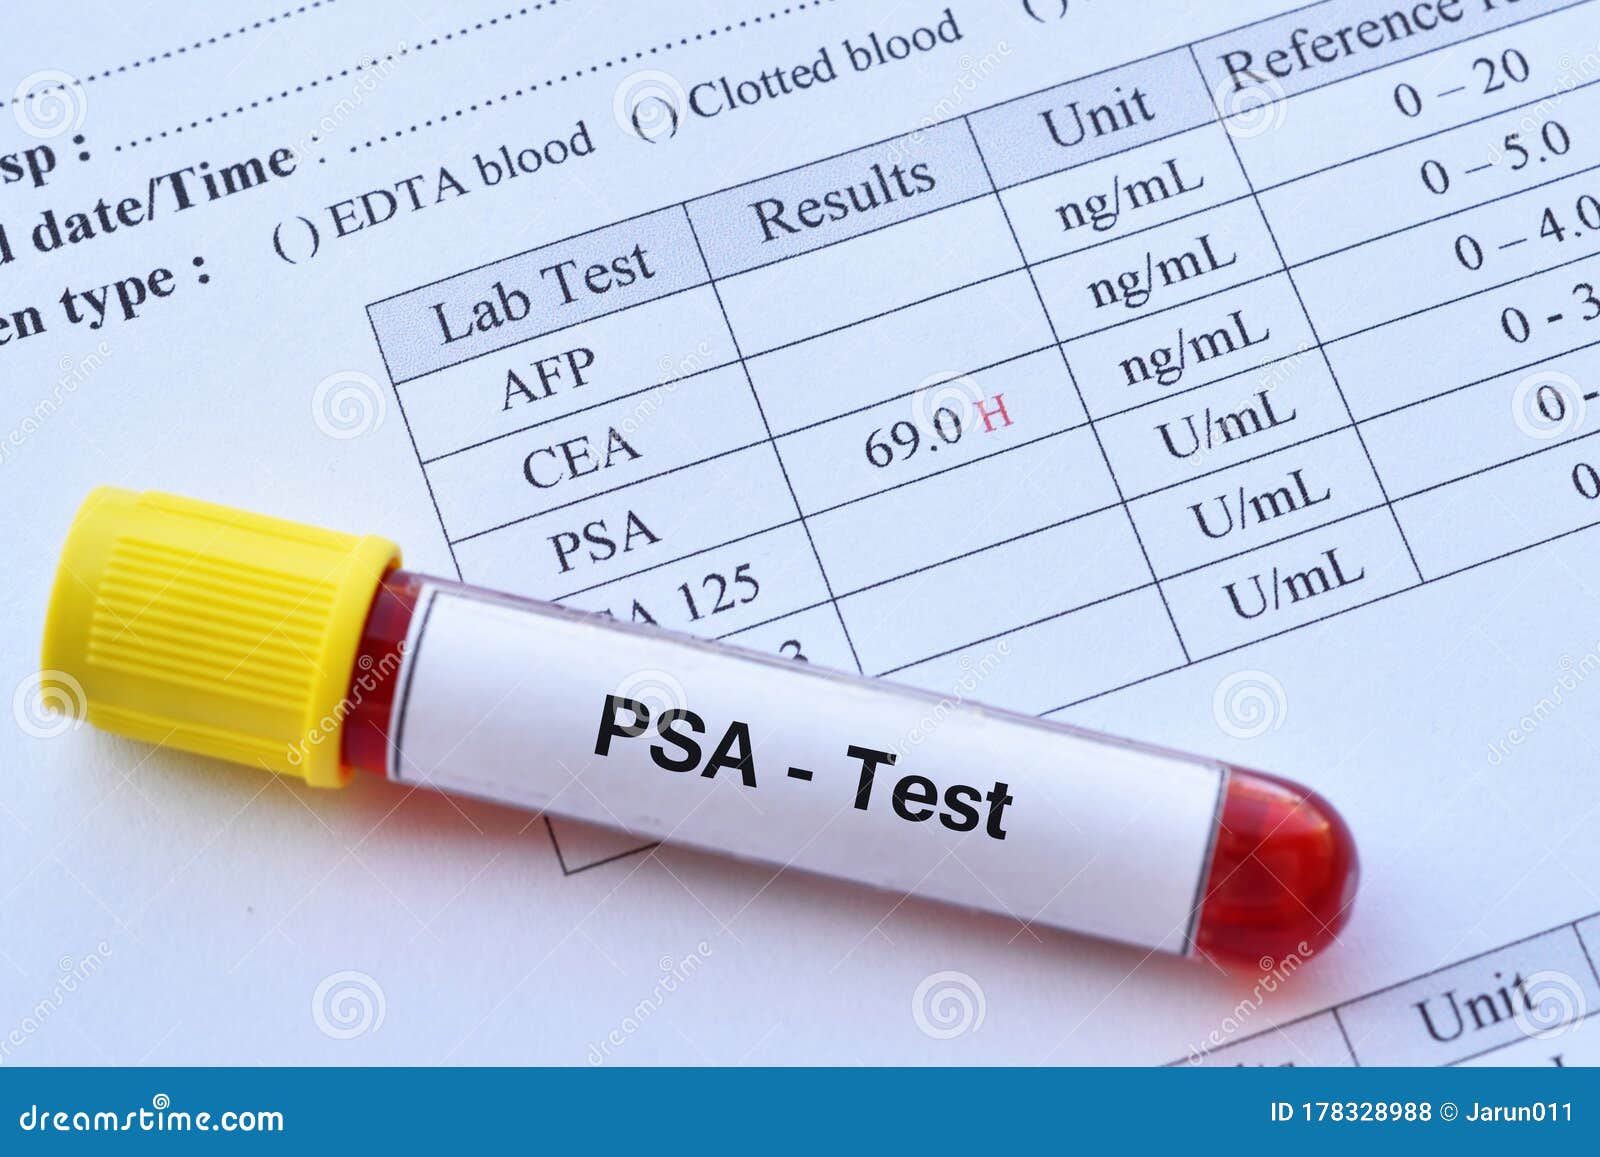 Abnormal High PSA Test Result Stock Photo - Image of hematology ...